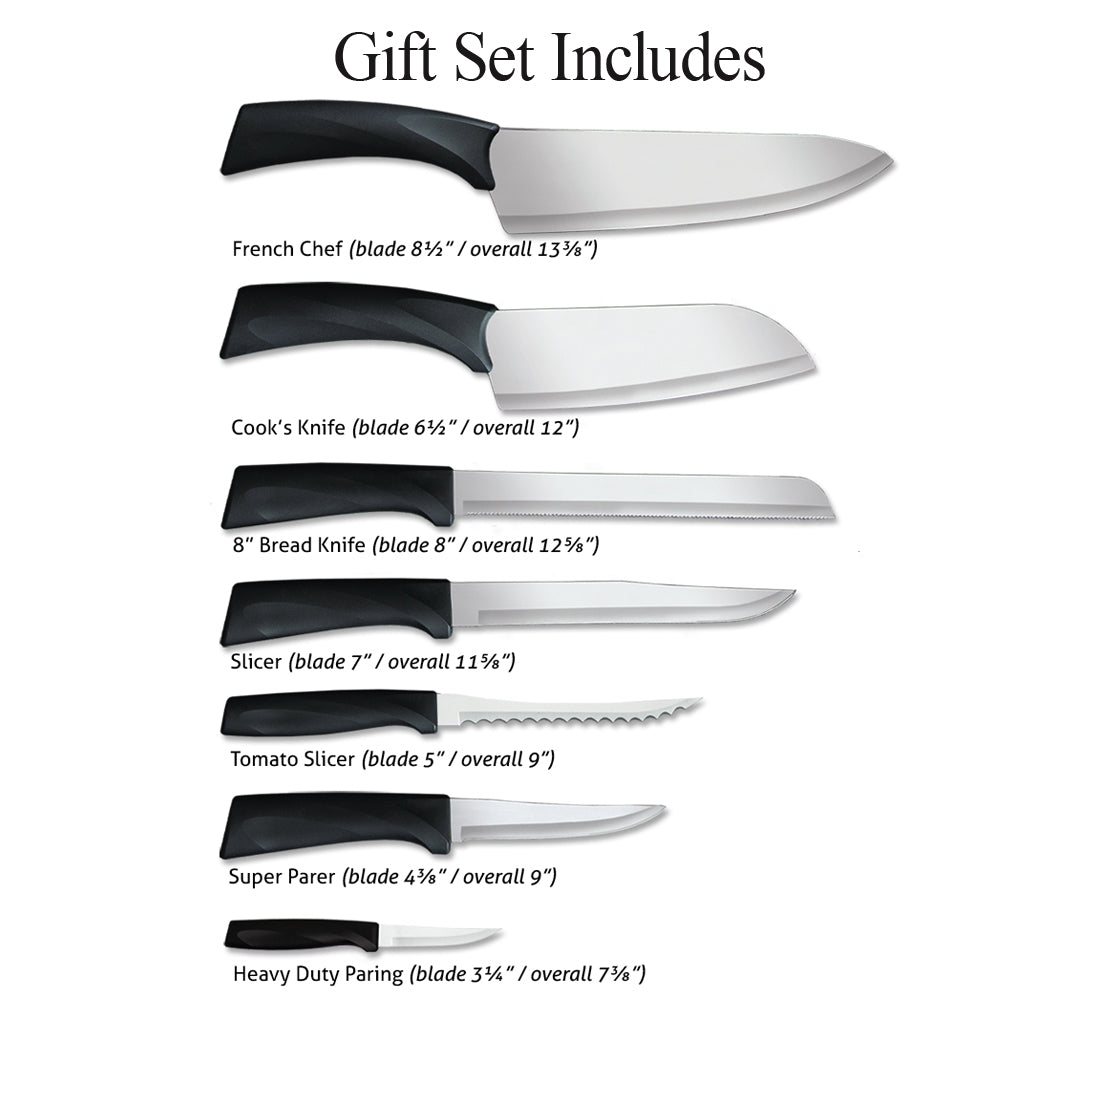 Rada Cutlery Knife Set Oak Knife Block 7 Stainless Steel Culinary Knives